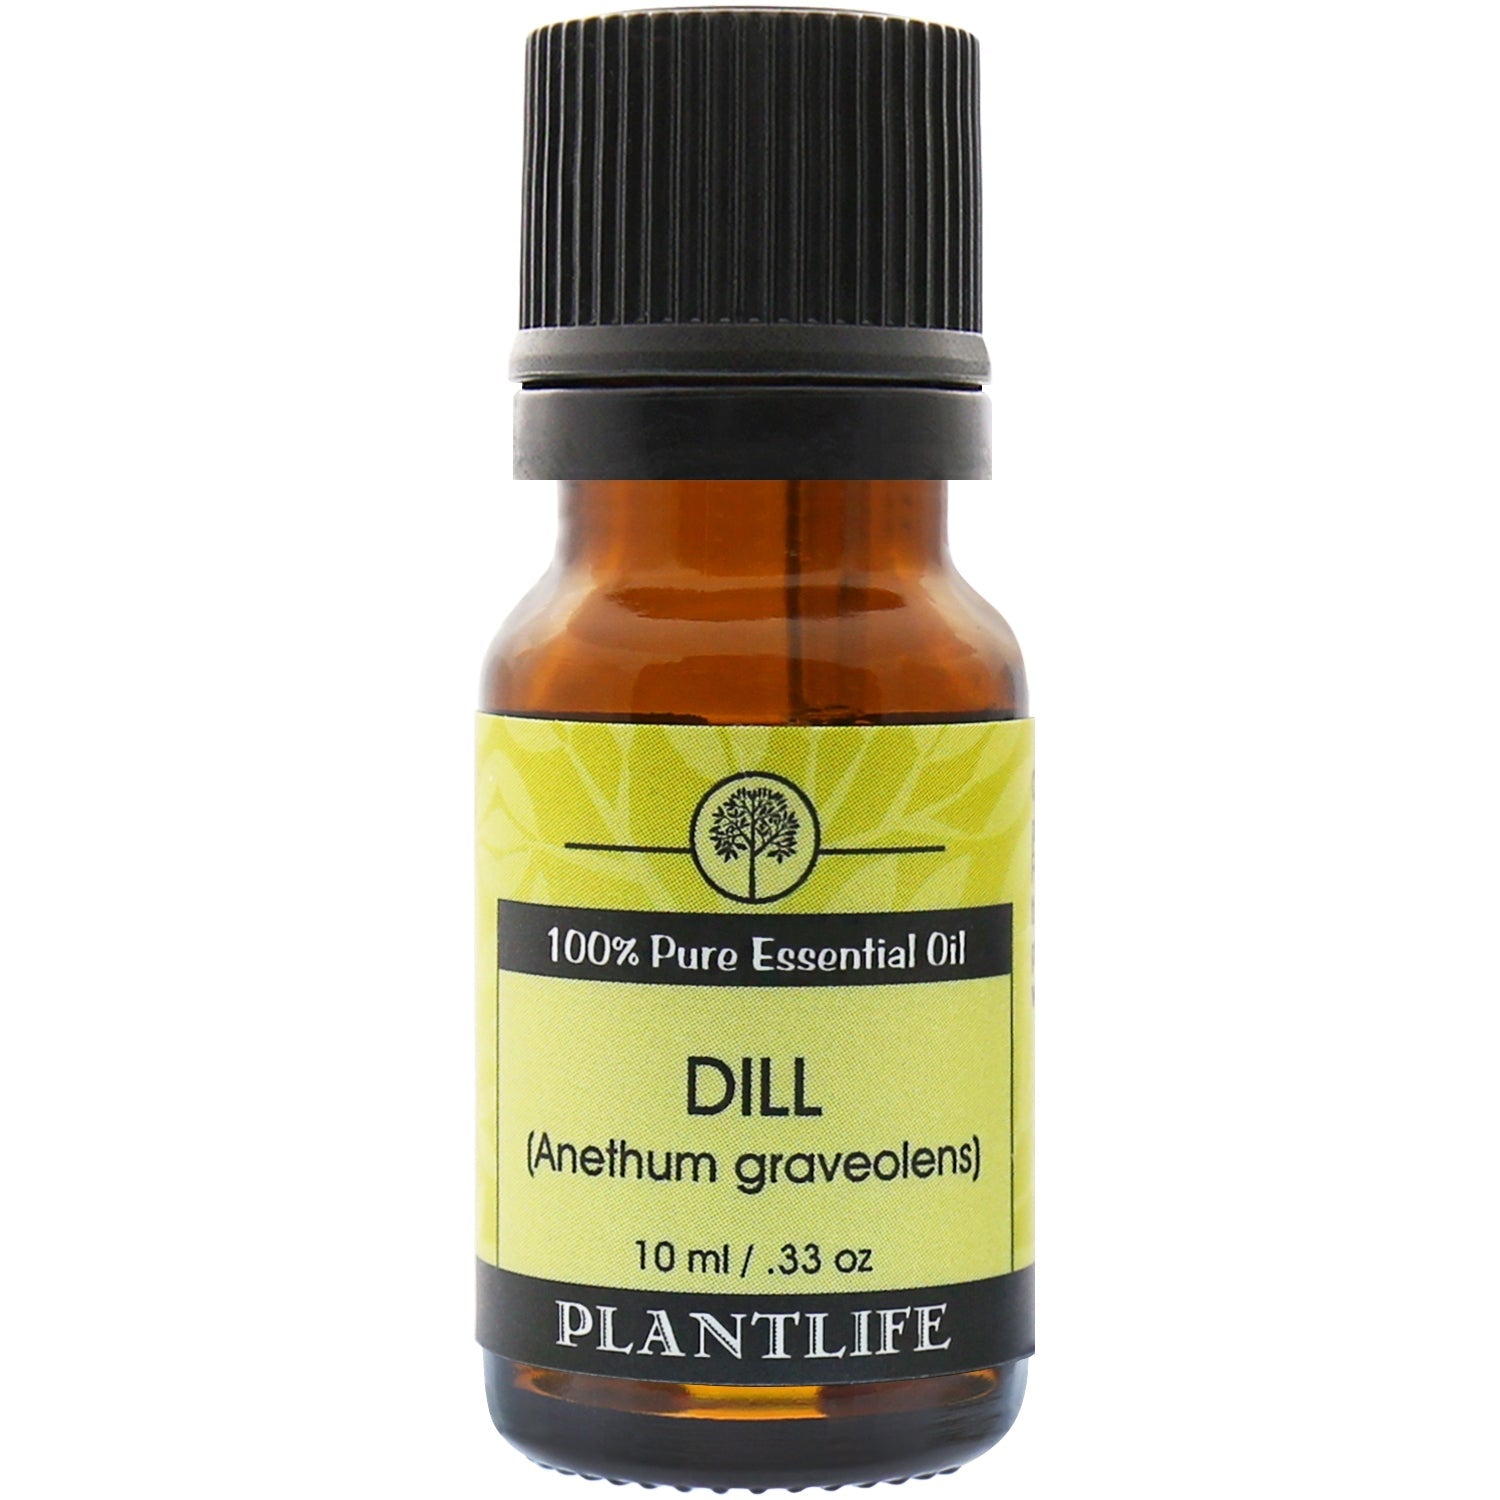 Dill Organic Essential Oil